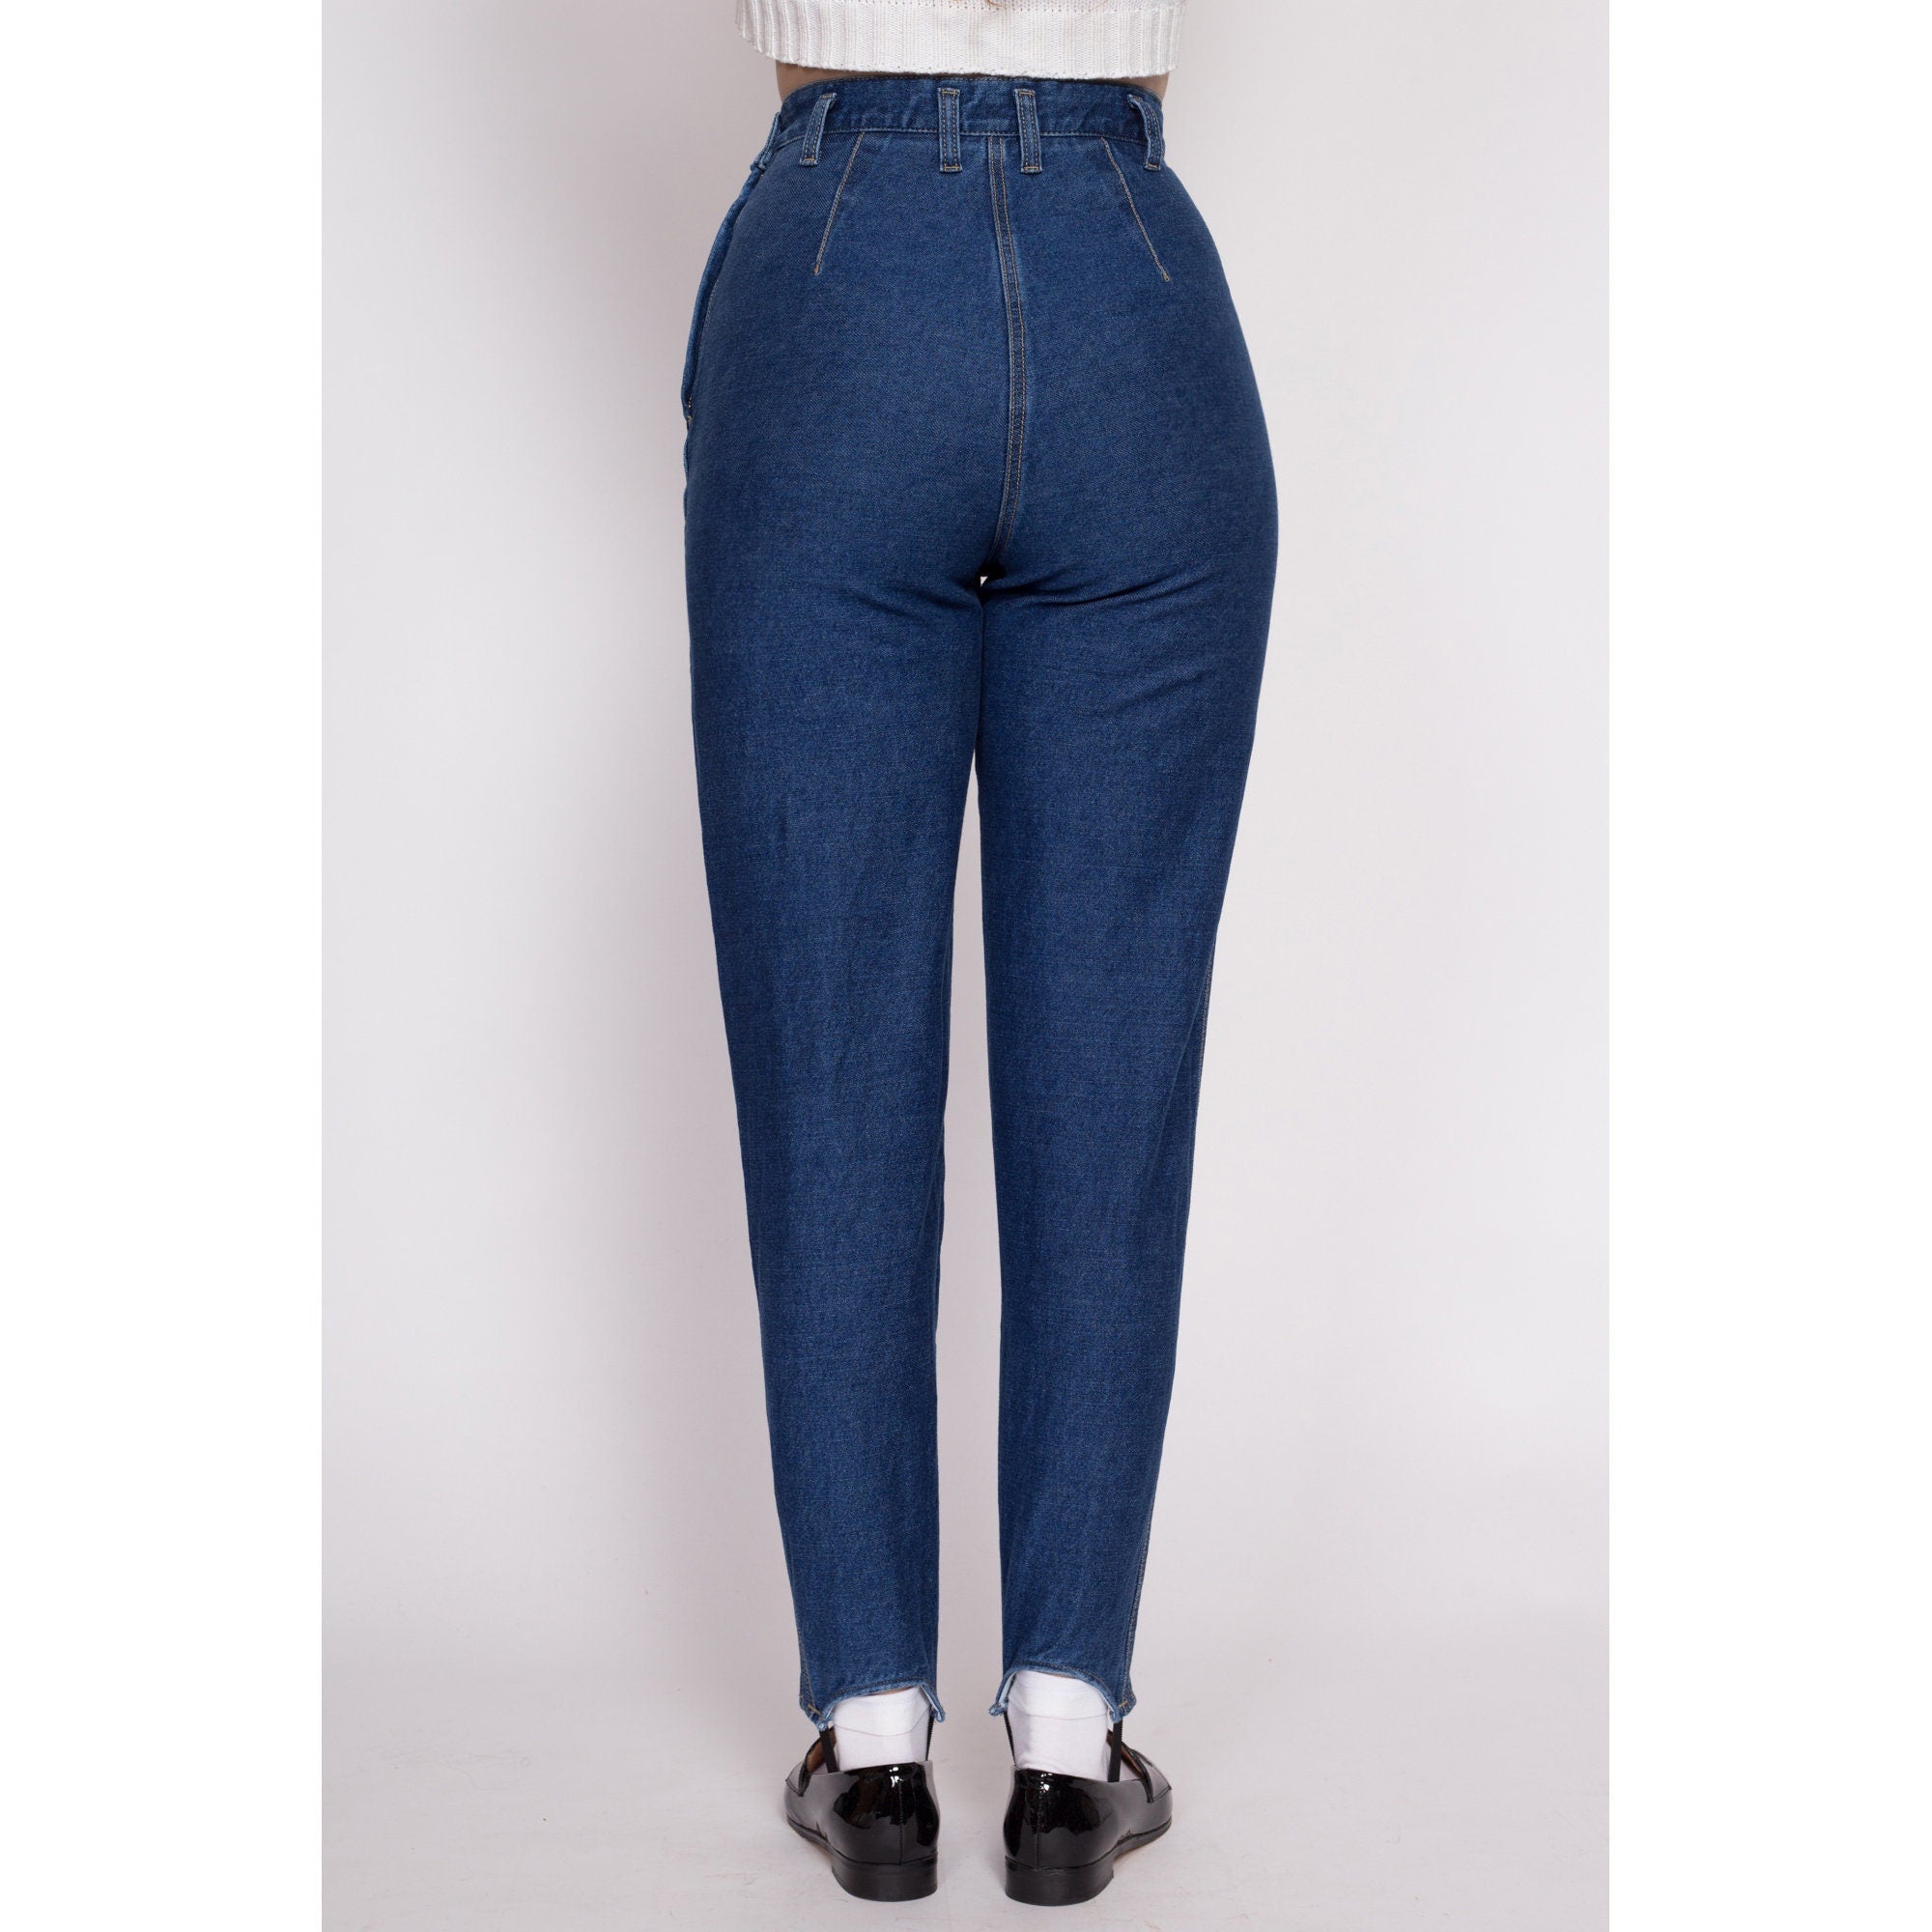 90s Lizwear Stirrup Side Zip Jeans - Extra Small, 25